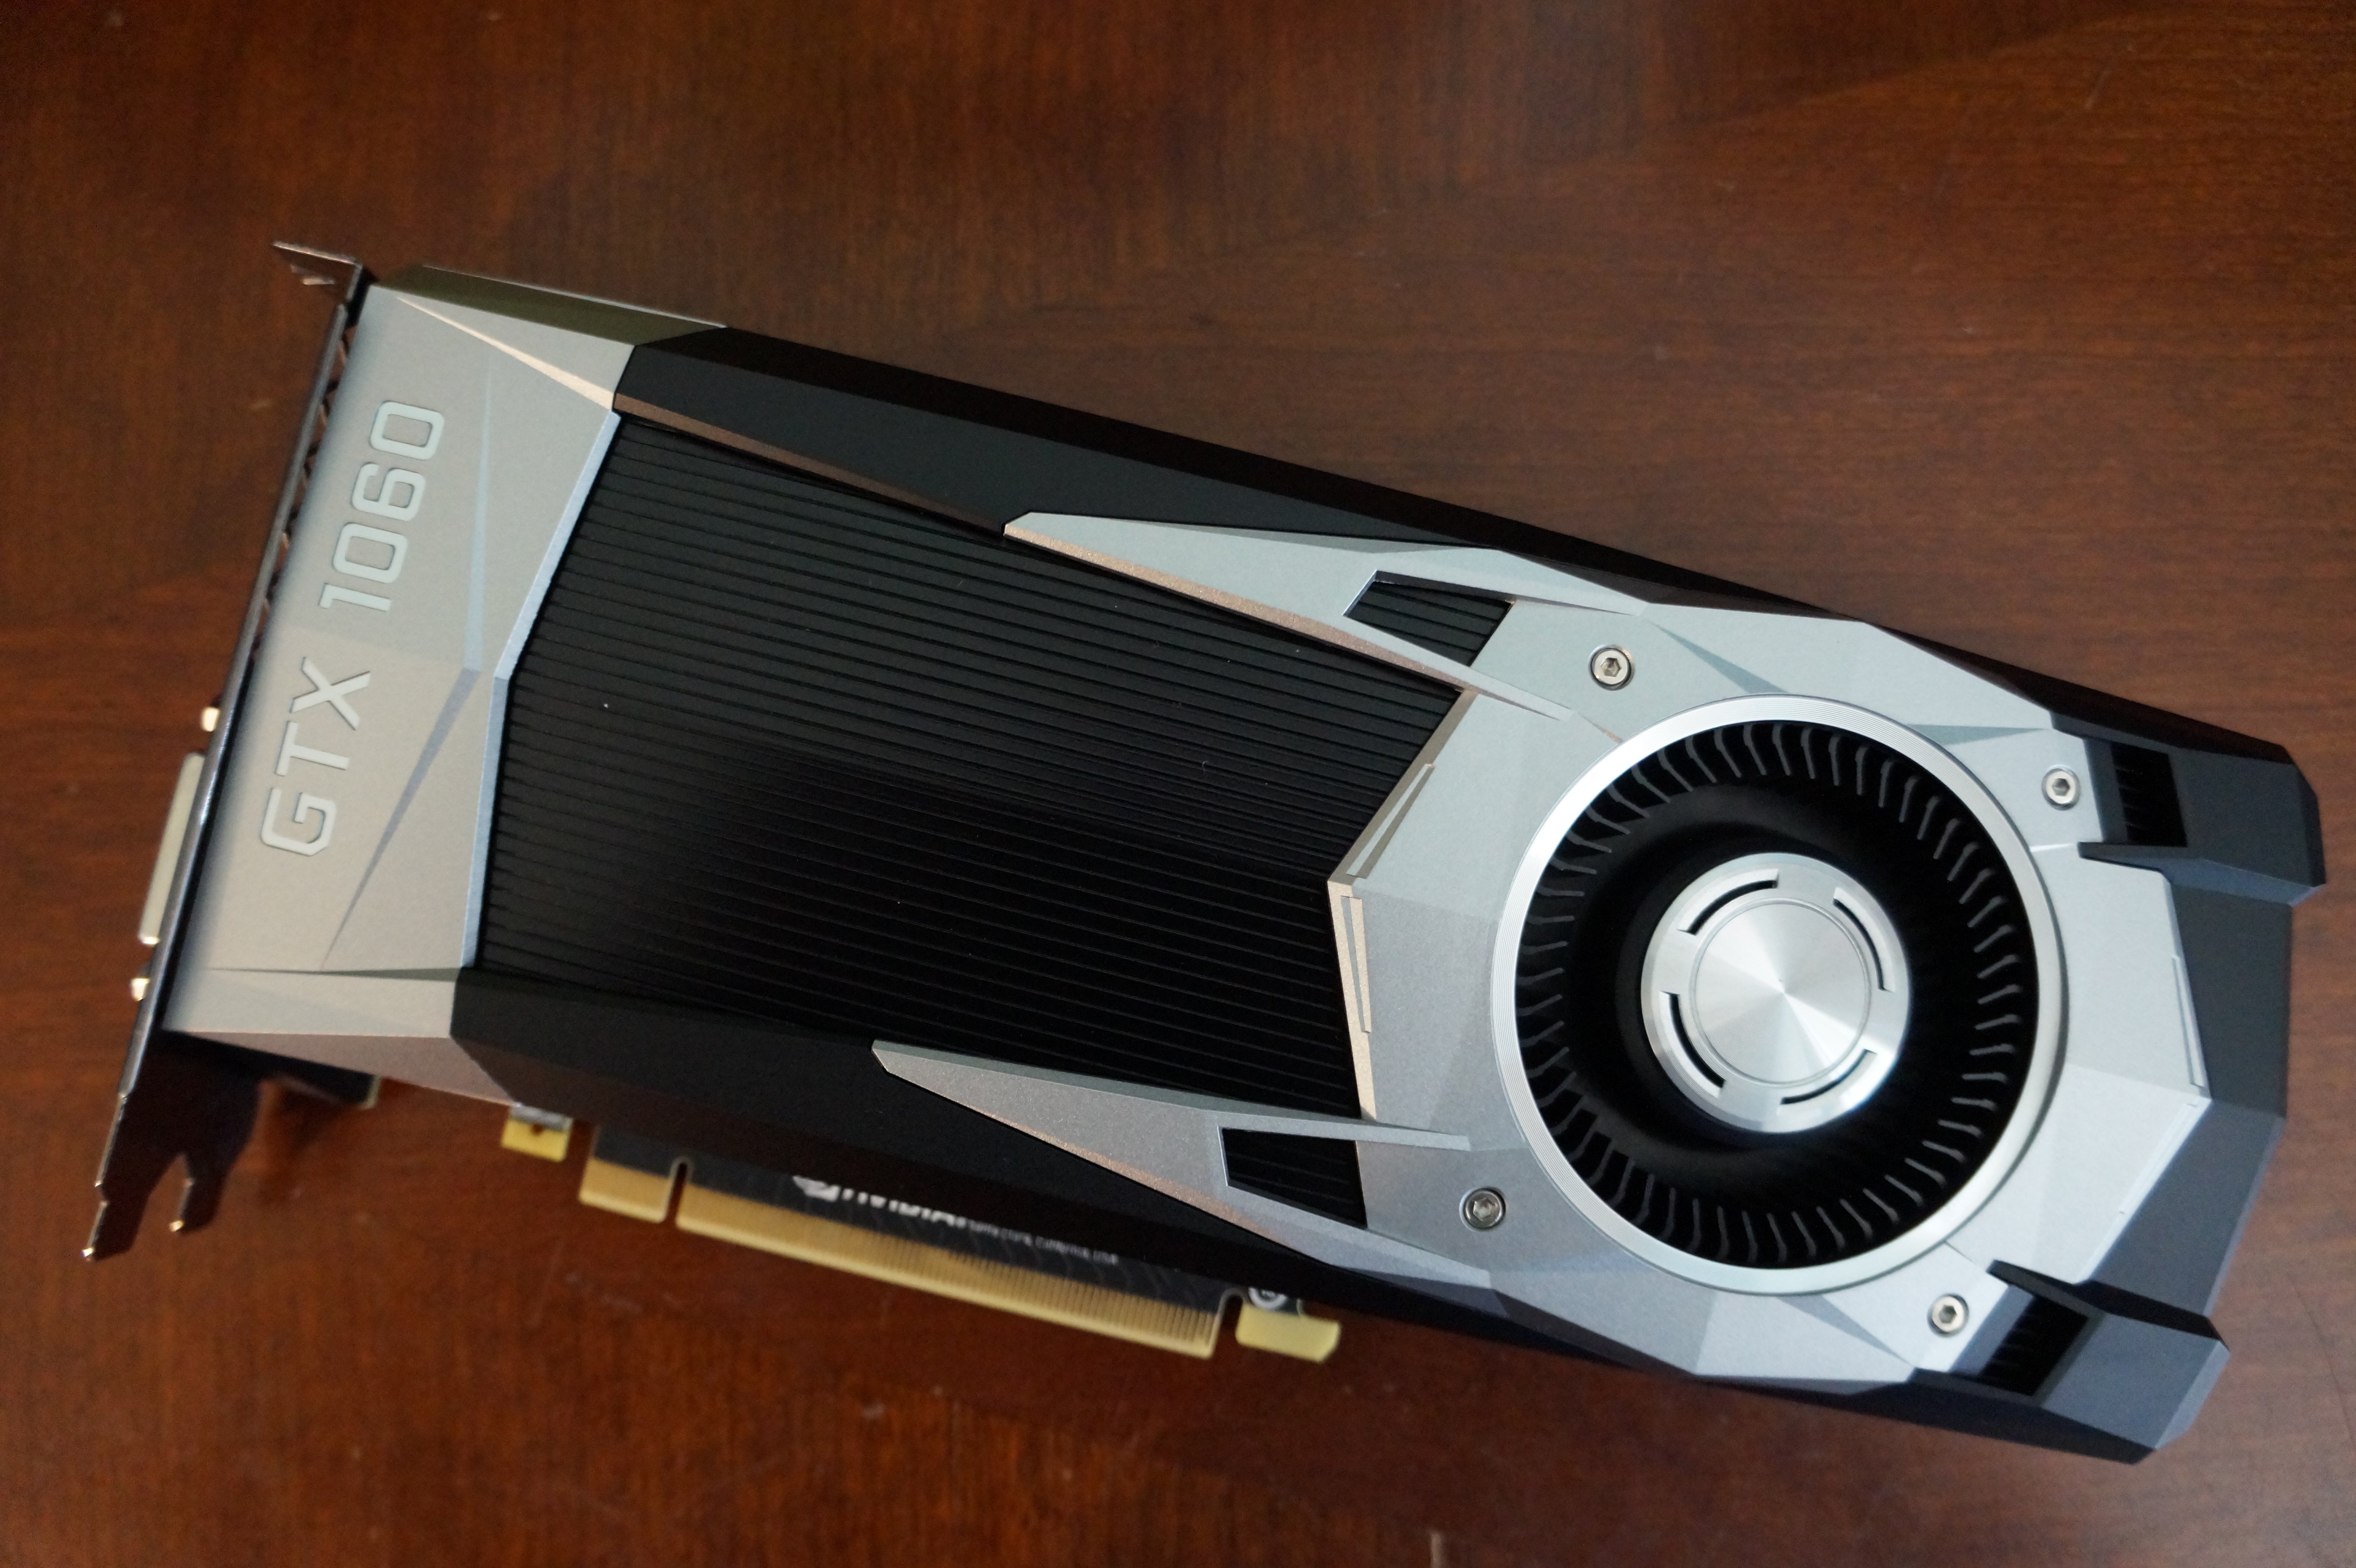 Nvidia's GeForce GTX 1060 is a $250 GTX 